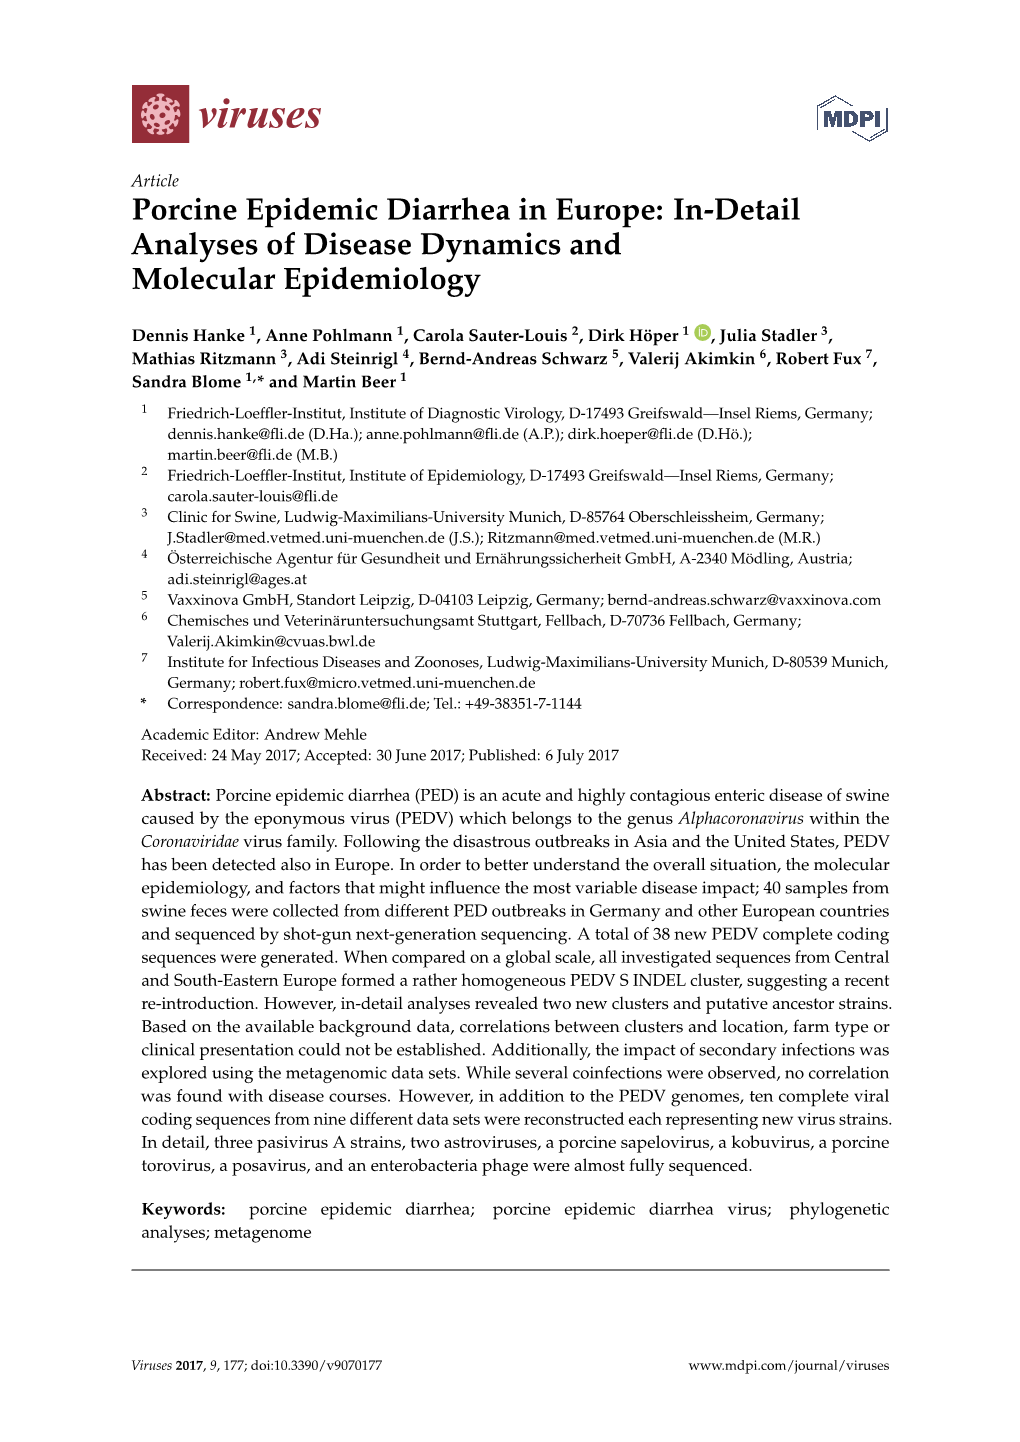 Porcine Epidemic Diarrhea in Europe: In-Detail Analyses of Disease Dynamics and Molecular Epidemiology